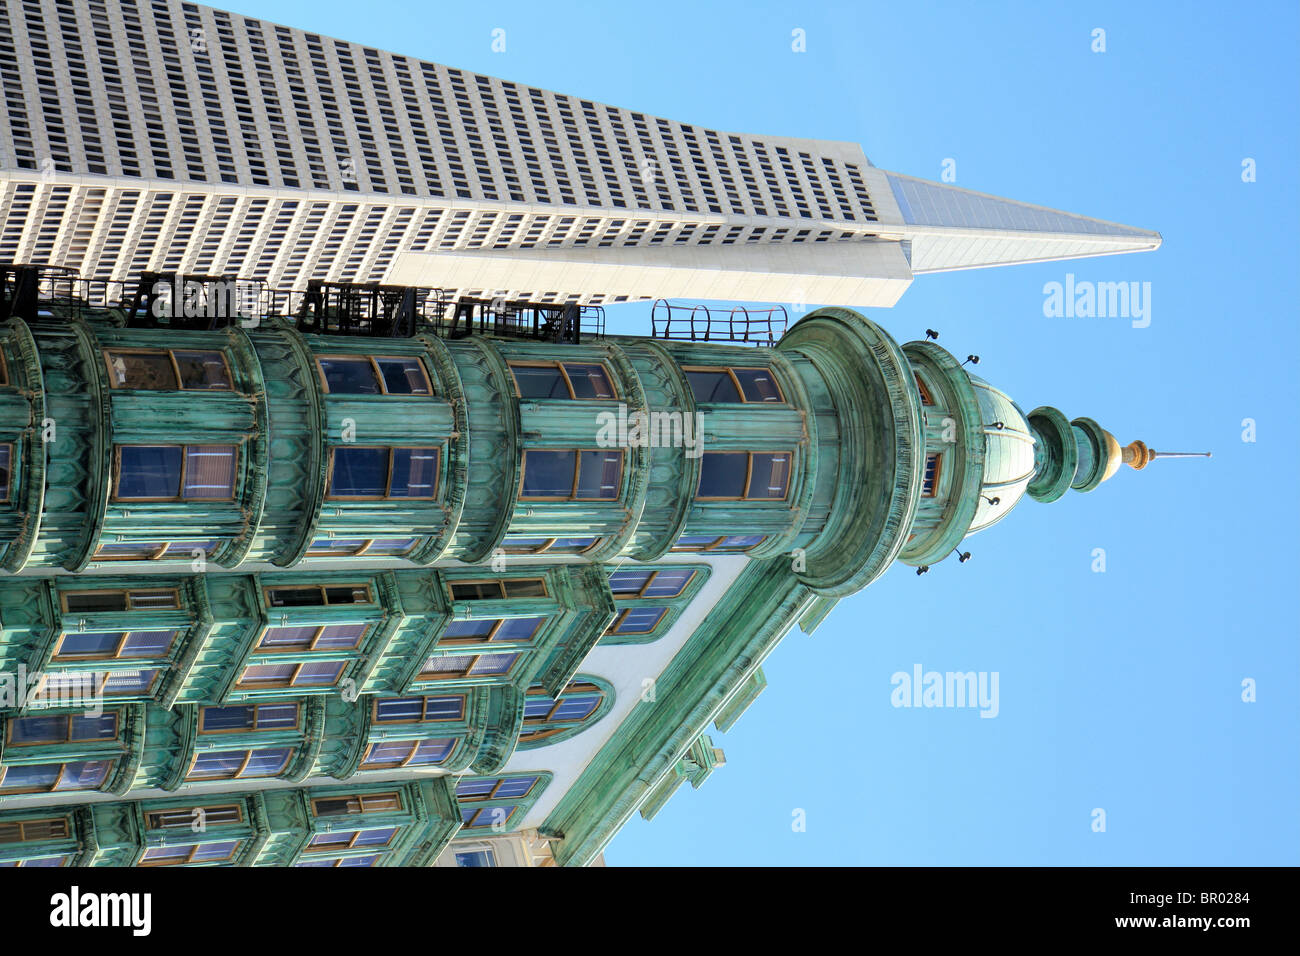 Transamerica pyramid and Columbus tower, San Francisco, California, United States of America Stock Photo